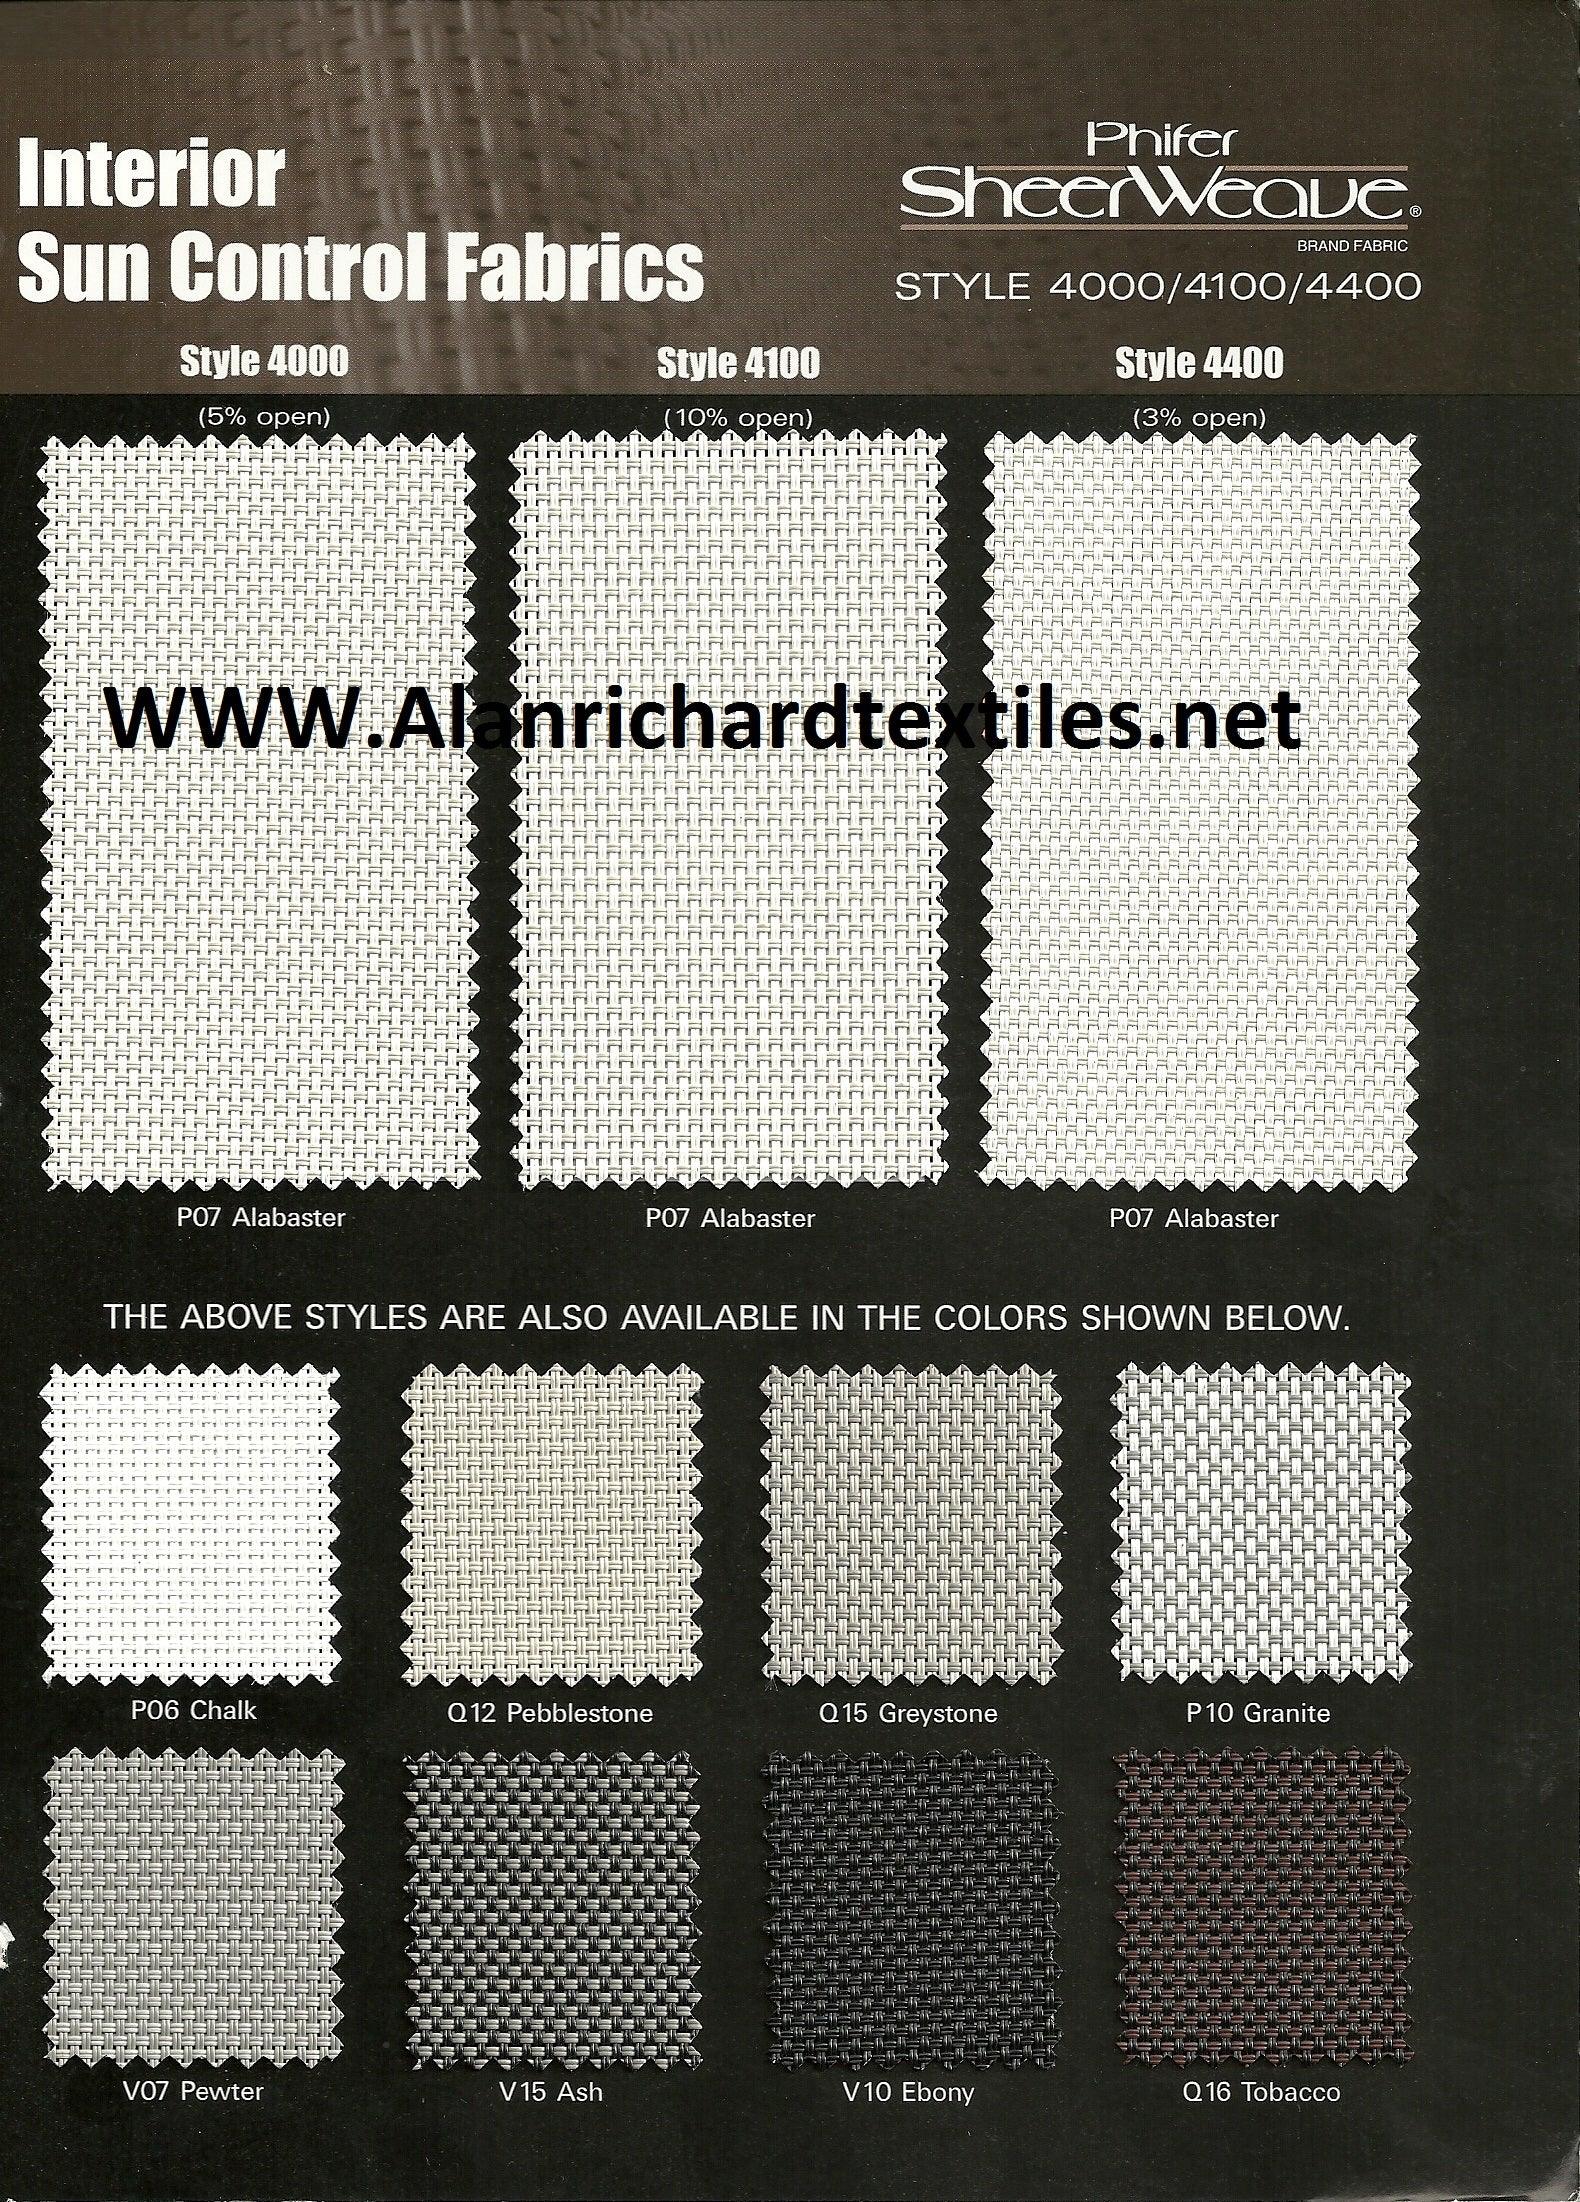 4400 Phifer SheerWeave® Series (3% openness) - Alan Richard Textiles, LTD